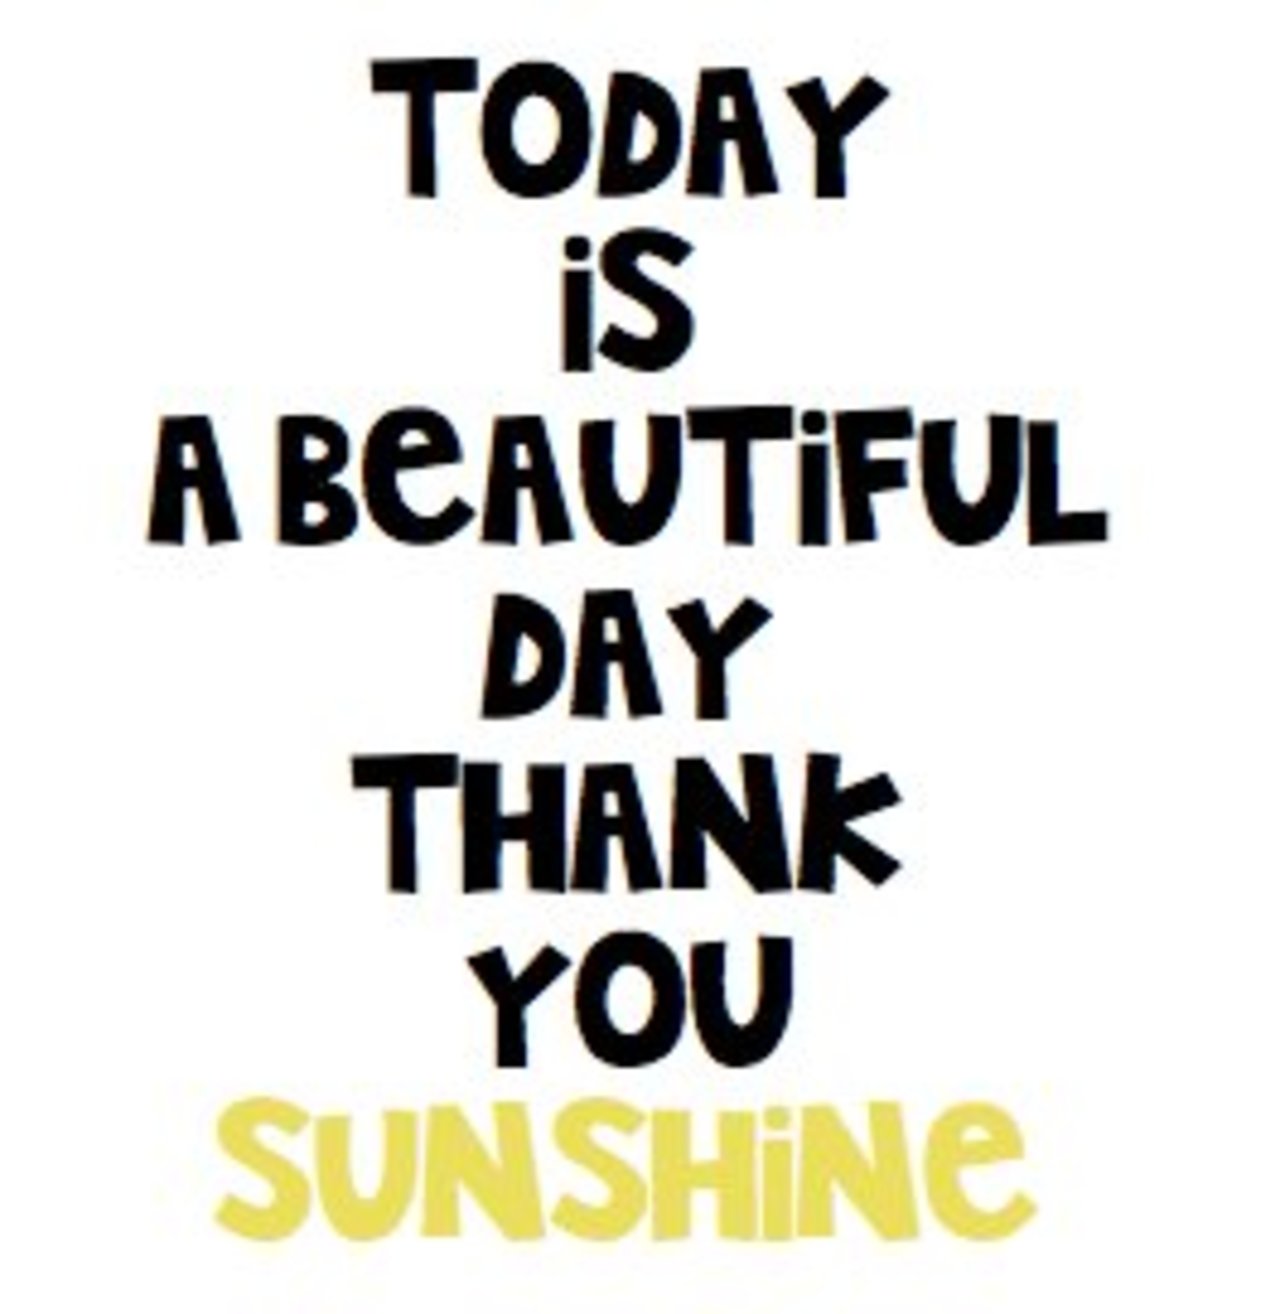 TODAY IS A BEAUTIFUL DAY THANK YOU SUNSHINE #HappyTuesday #entrepreneur #sunshine #thankyou #art #graffiti https://t.co/gfkp1IPTZD